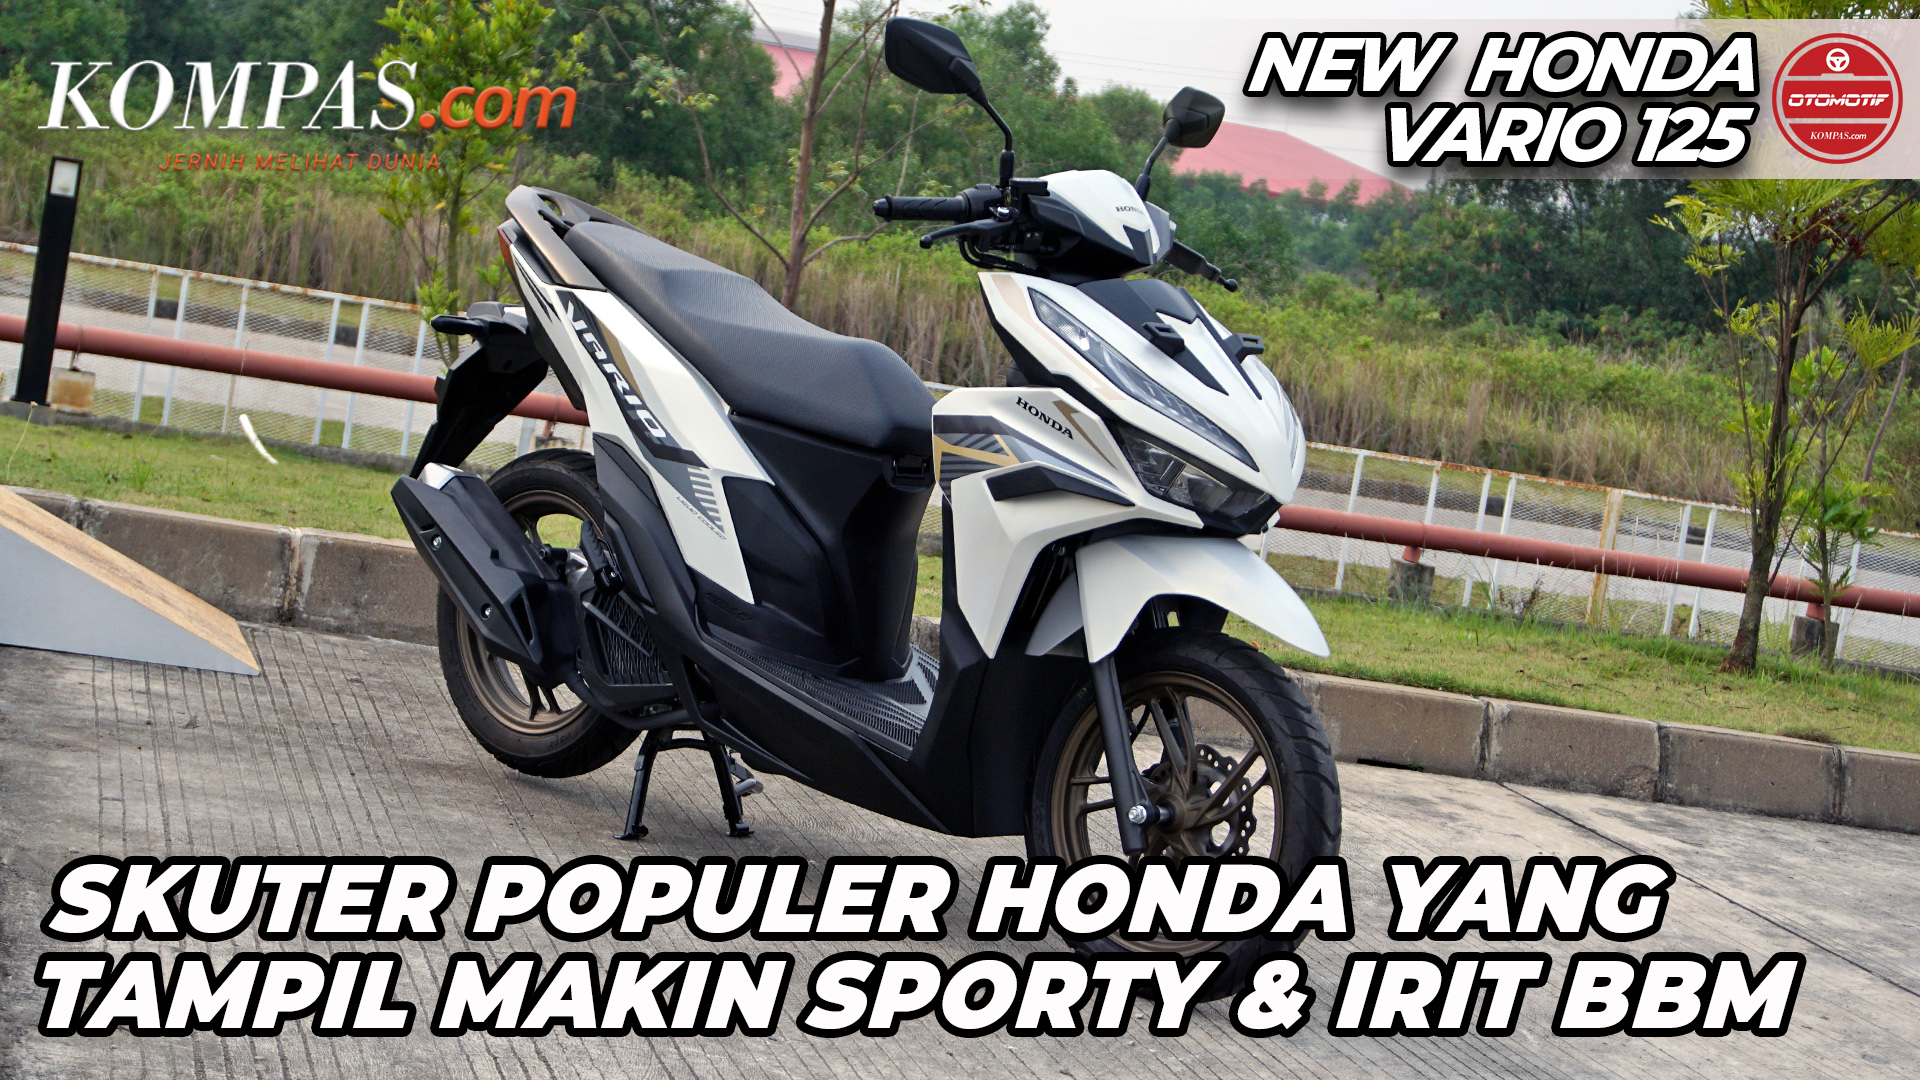 New Honda Vario 125 | Tampil Makin Sporty & Irit BBM